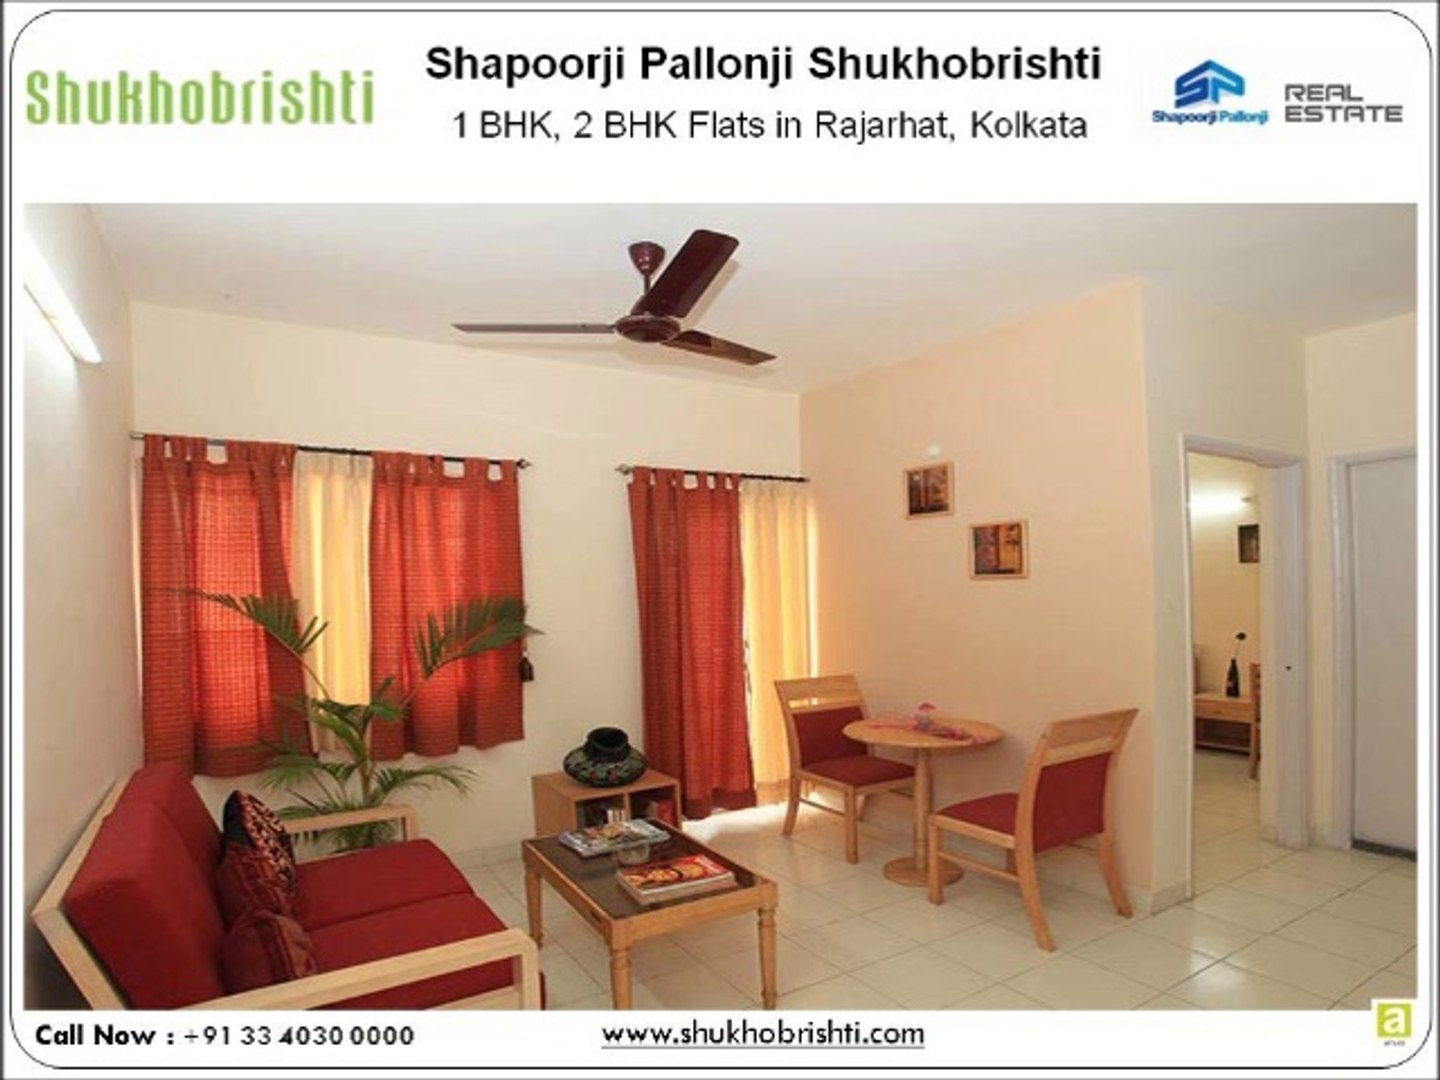 Shukhobrishti Offers 1 Bhk 2 Bhk Flats In Rajarhat Kolkata